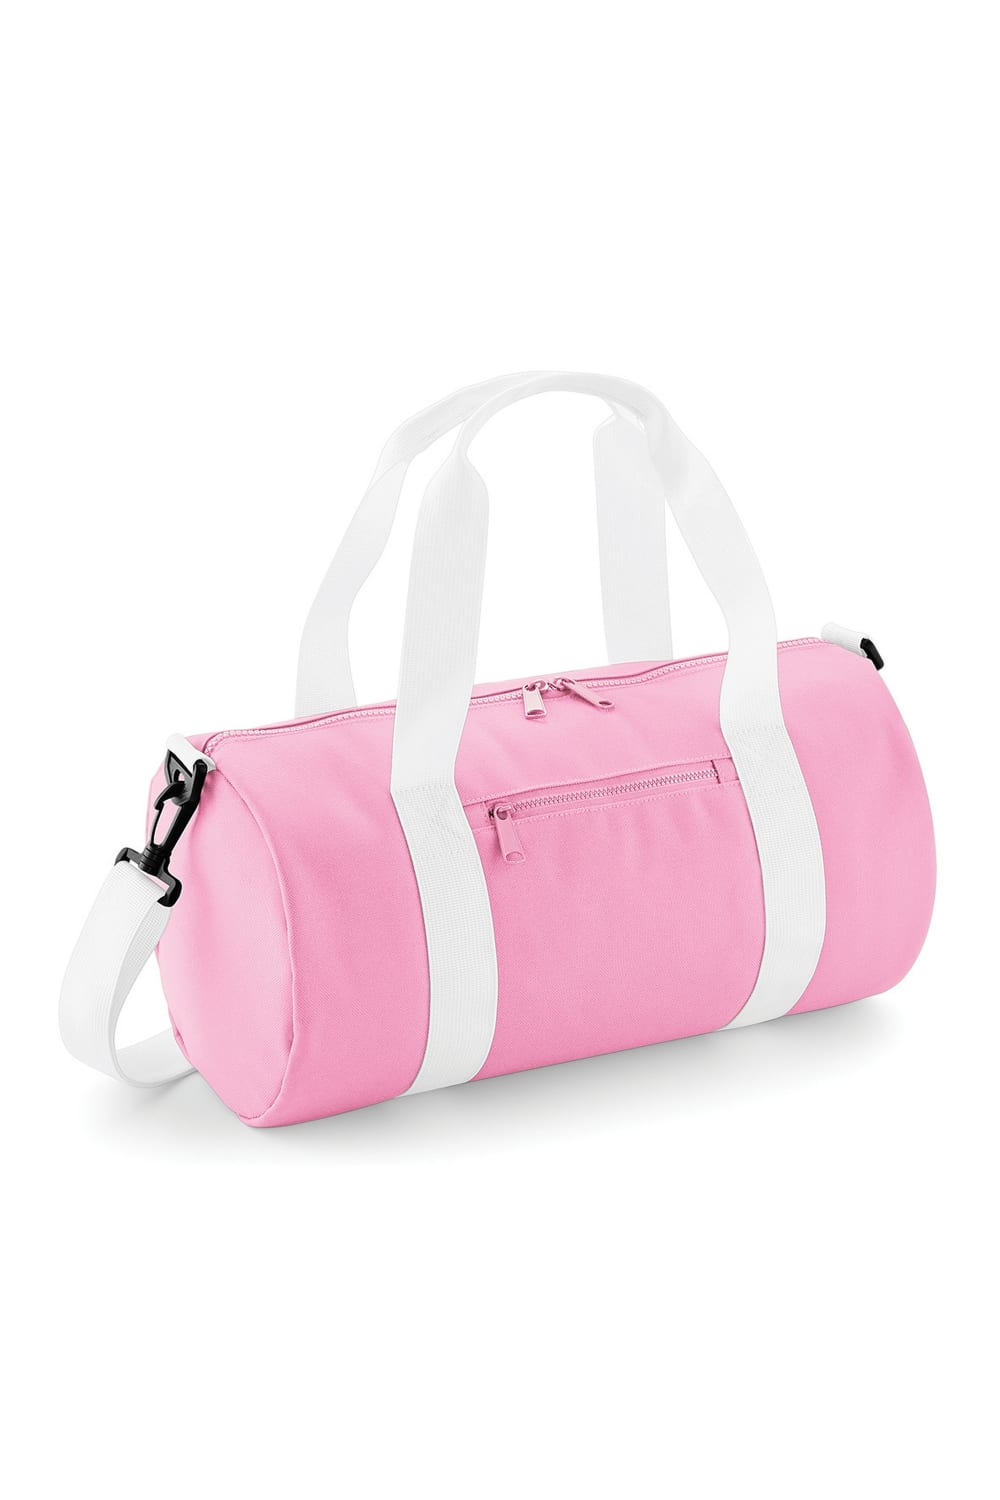 Mini Barrel Bag - Classic Pink/White